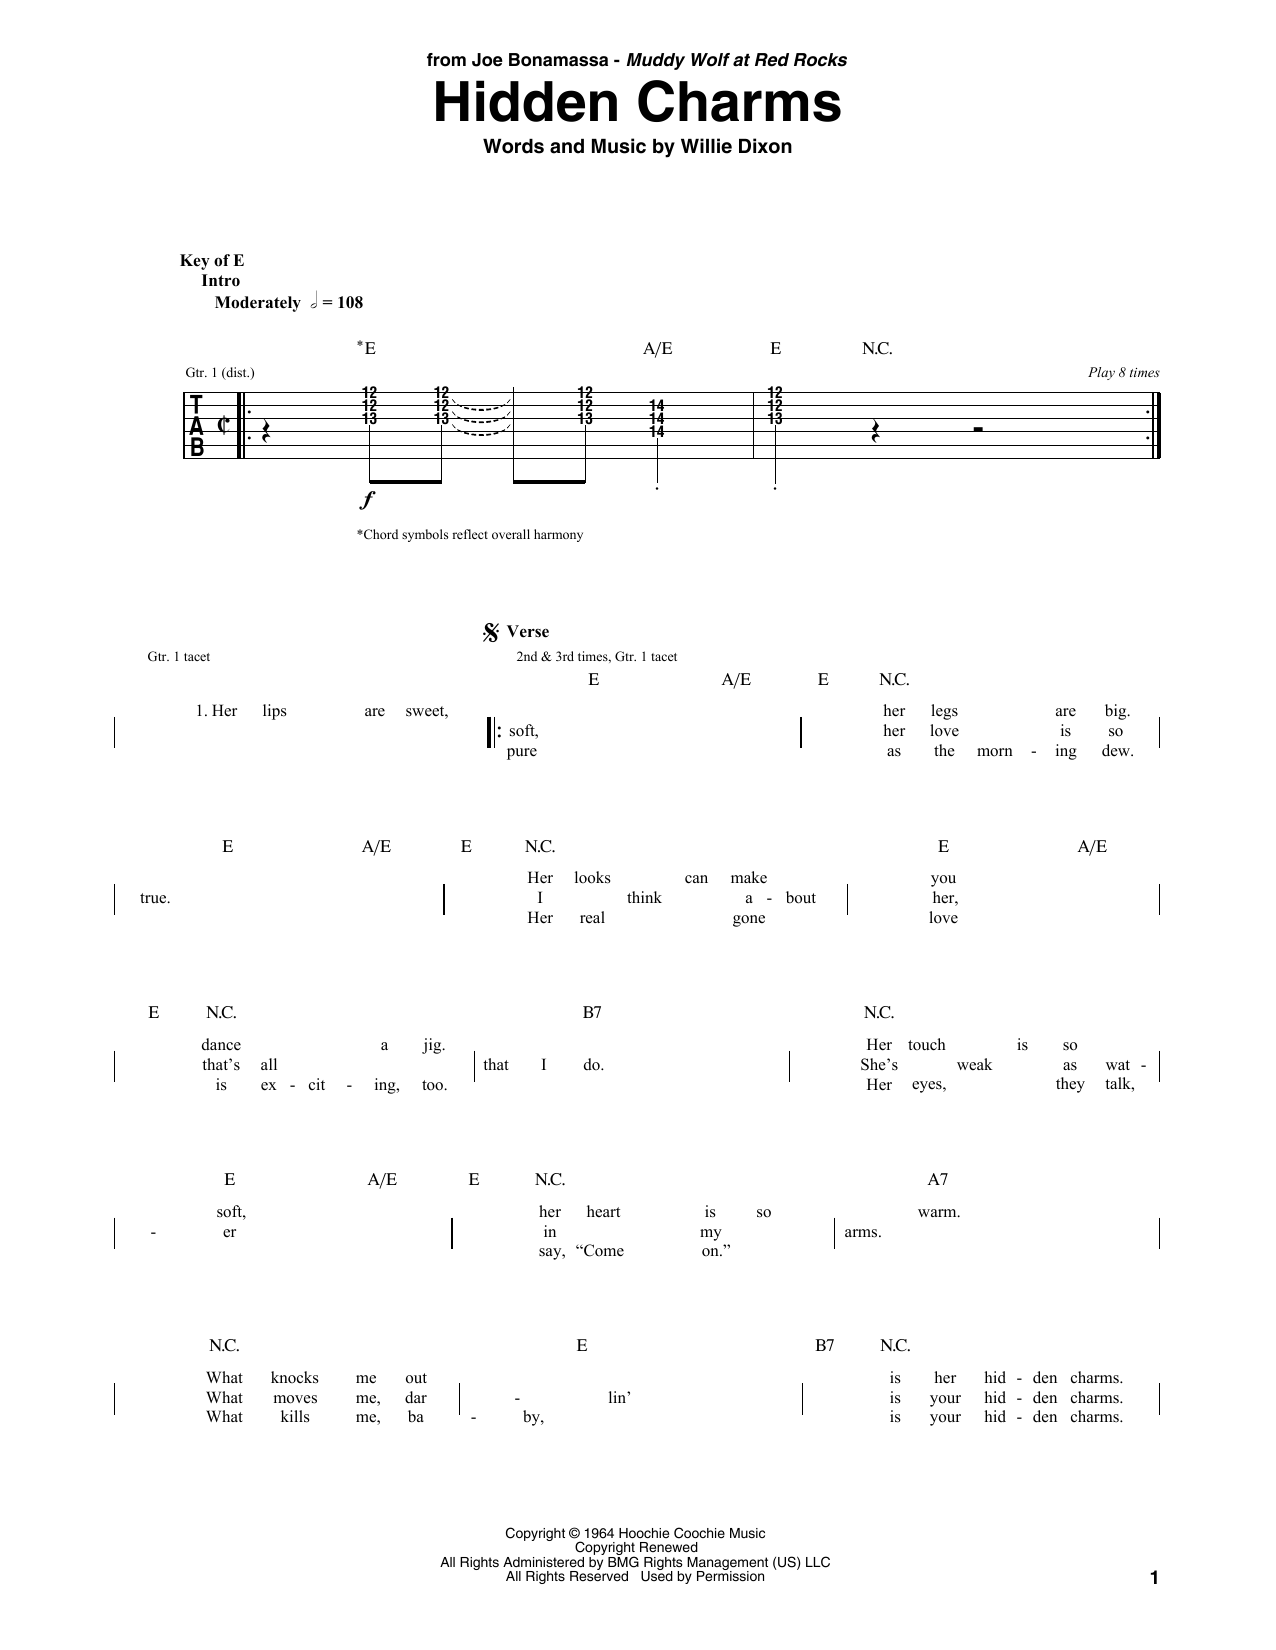 Joe Bonamassa Hidden Charms Sheet Music Notes & Chords for Guitar Tab - Download or Print PDF